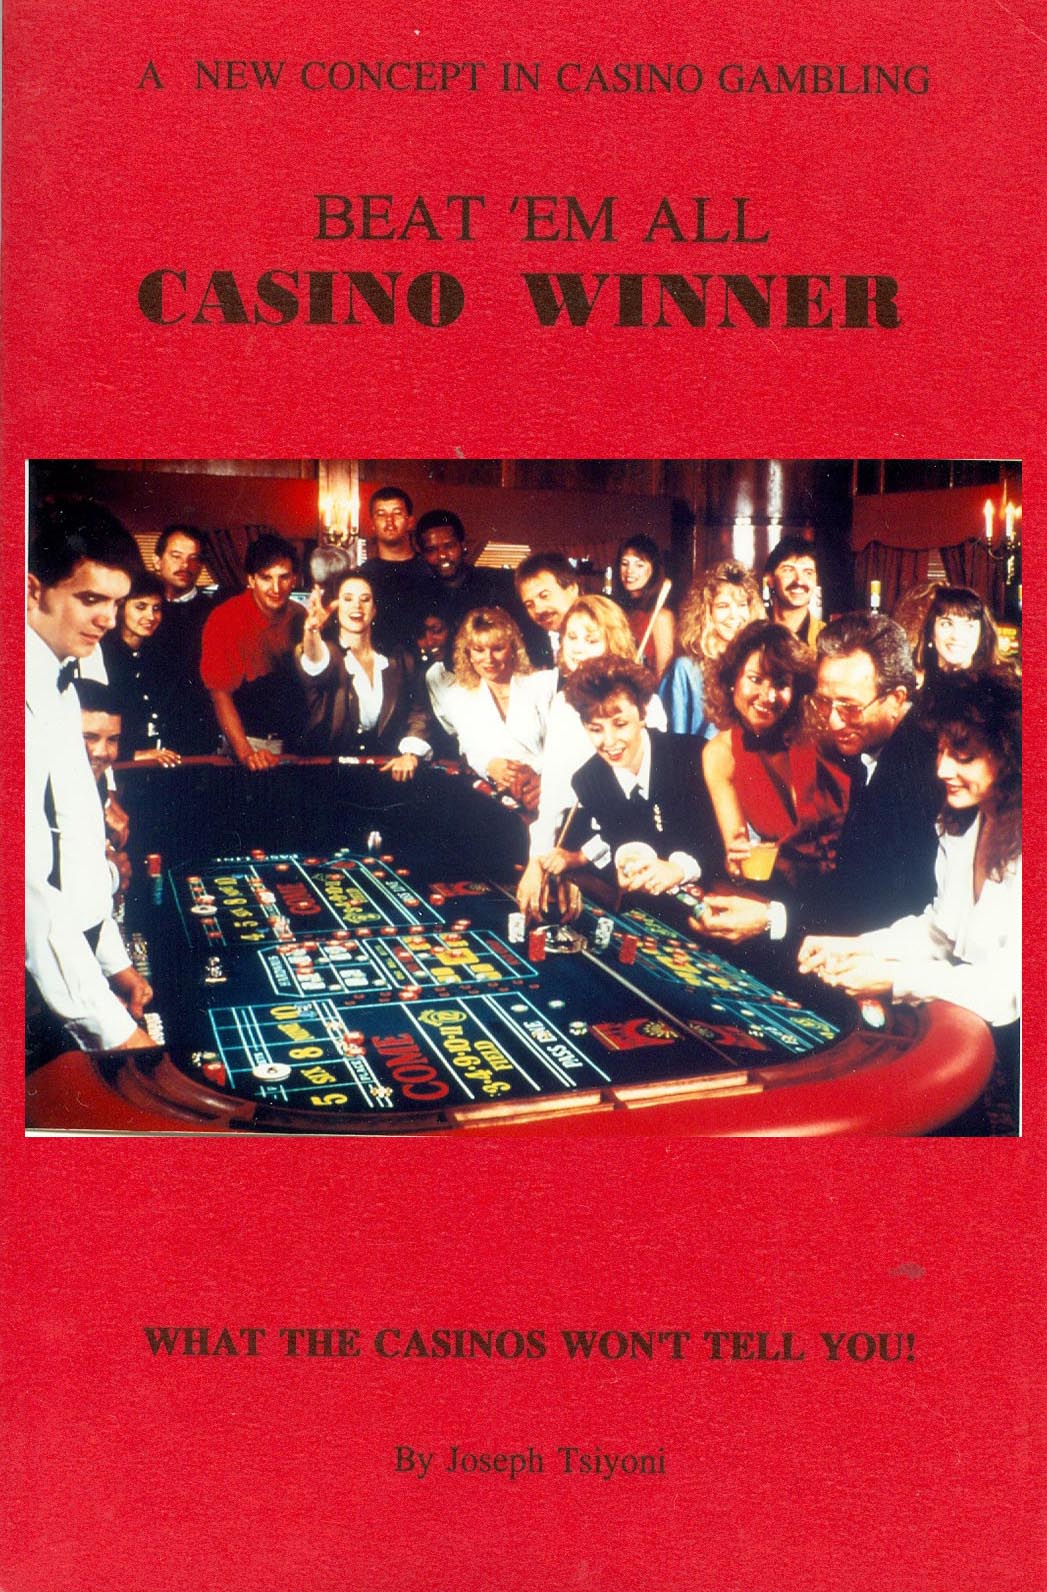 image casino fron